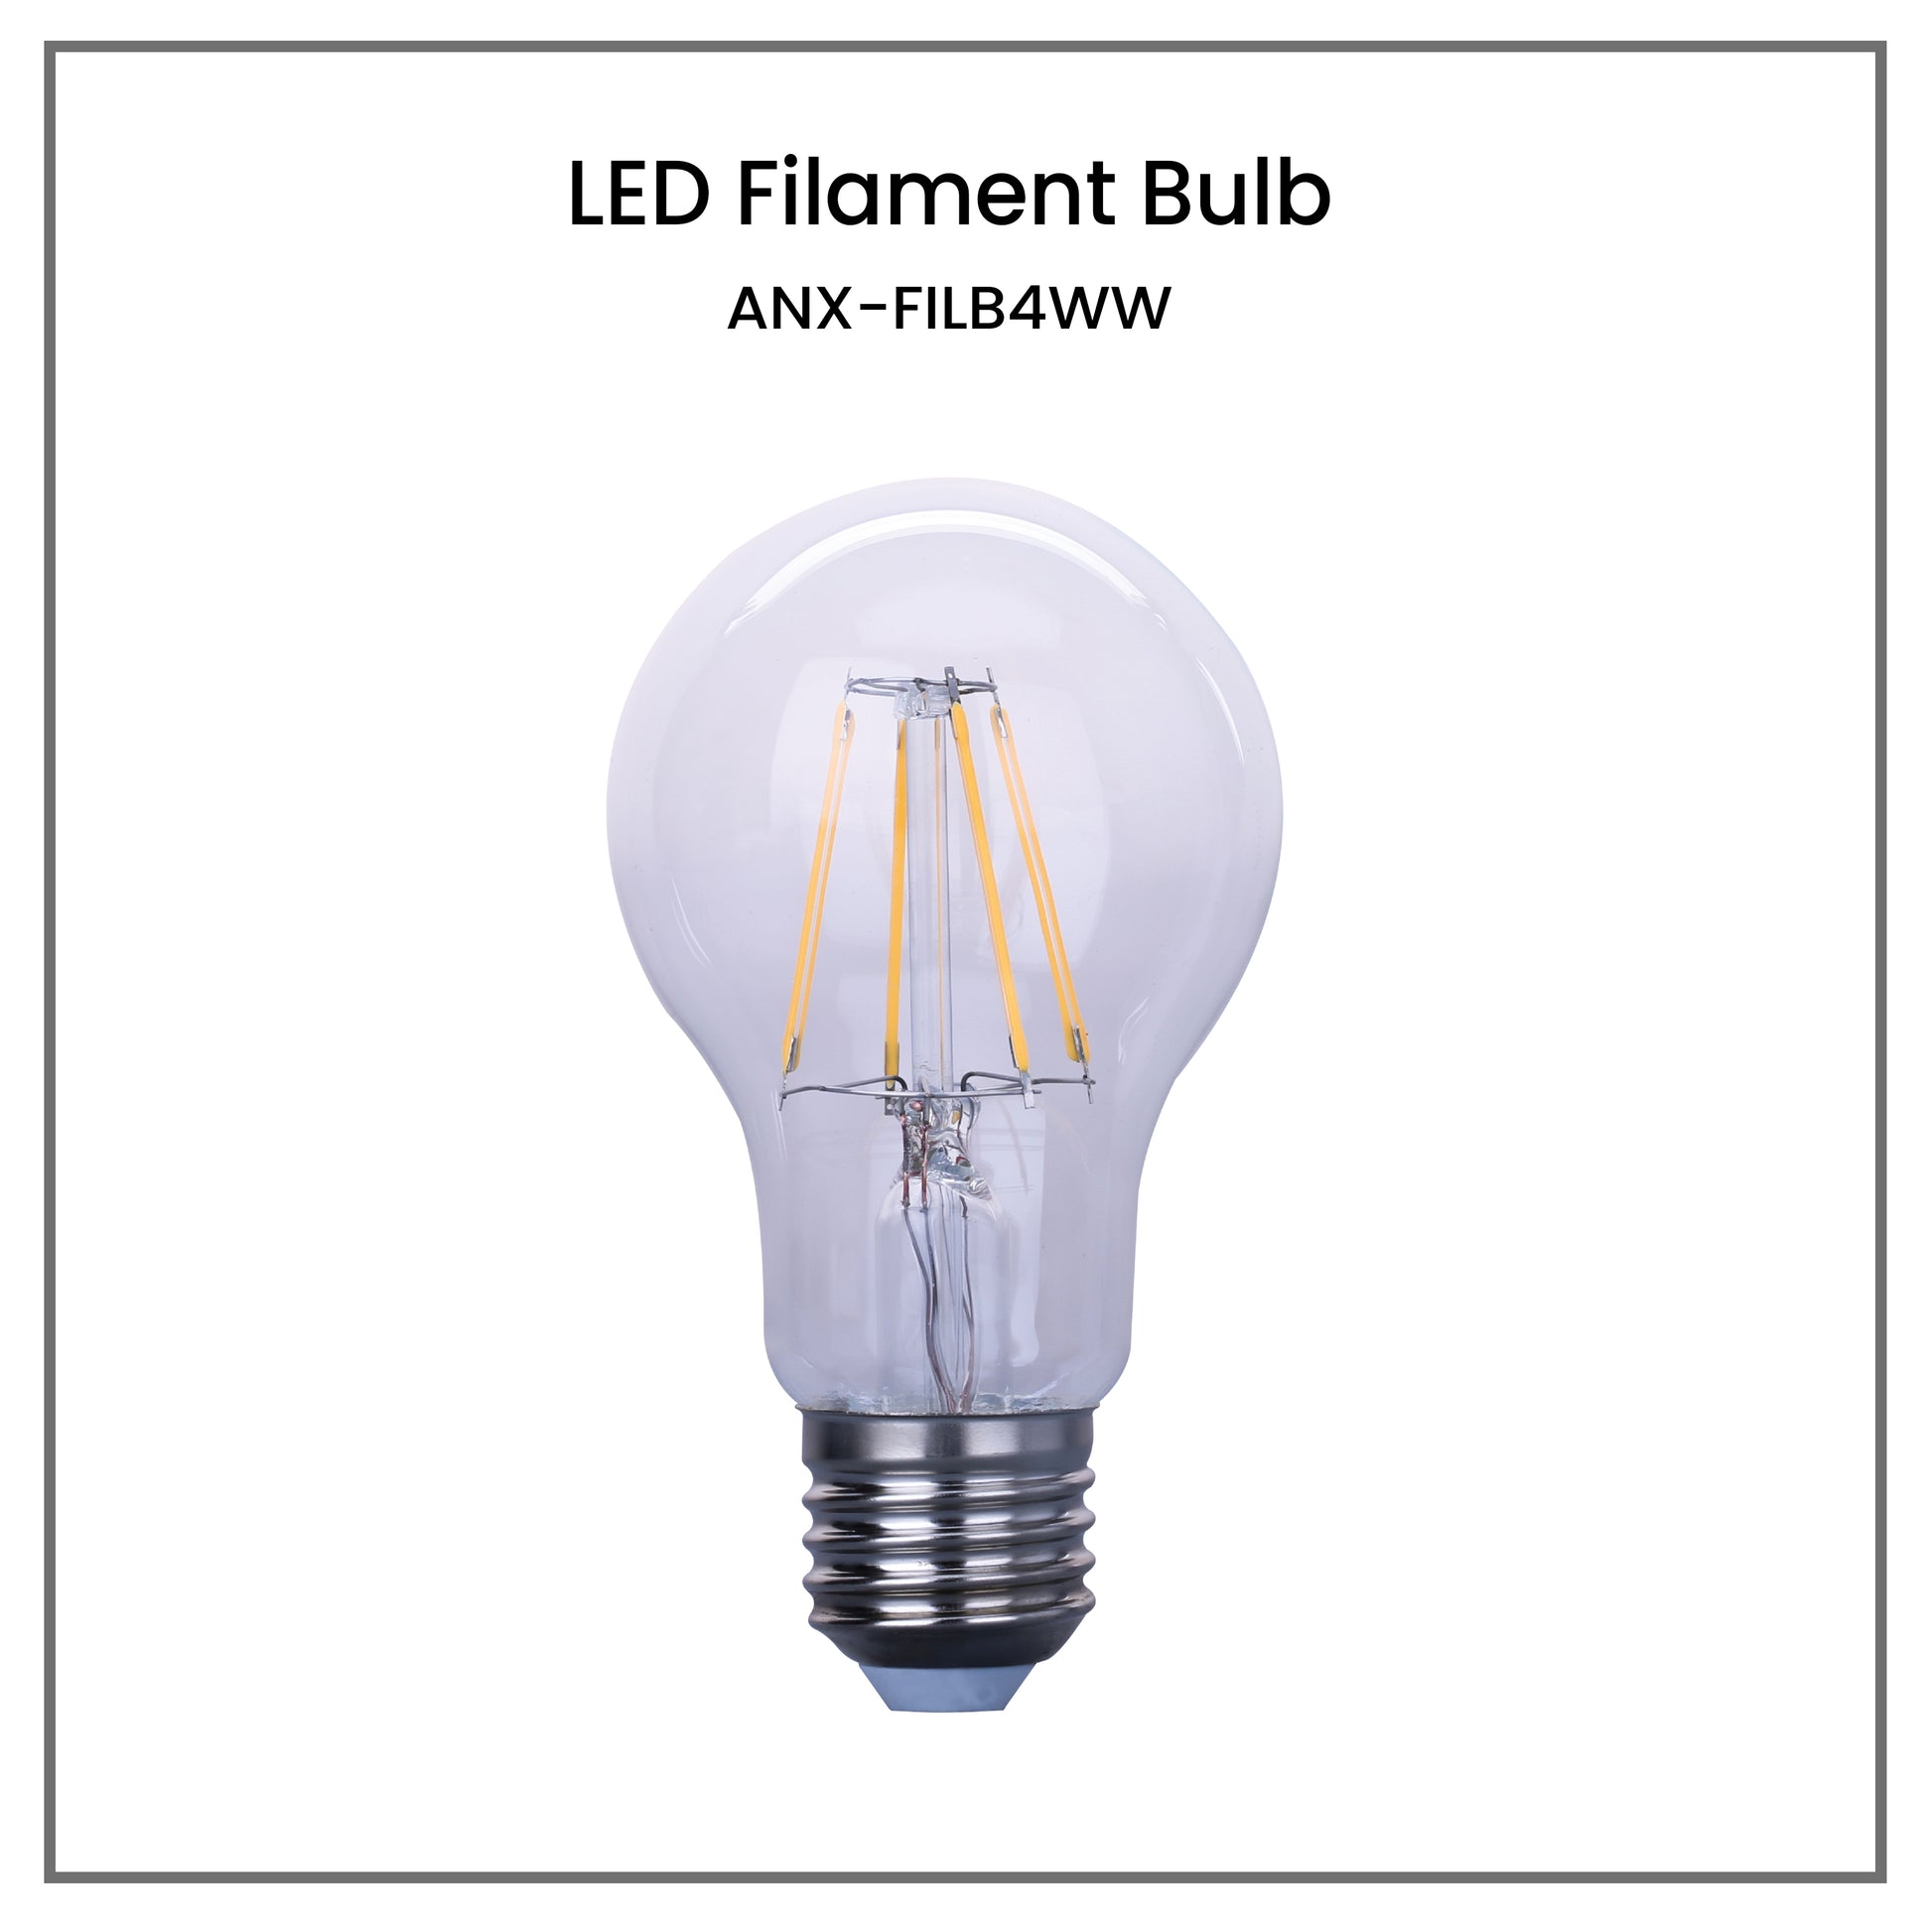 NxLedNxled Filament Bulb (ANX-FILB4WW)
Key Features:
Nxled Filament Bulb (ANX-FILB4WW)


4W, 3000K, Warm White, 340 lumens
E27, 60x108mm, 25,000HRS
220-240VAC 50/60Hz
BulbsNXLED